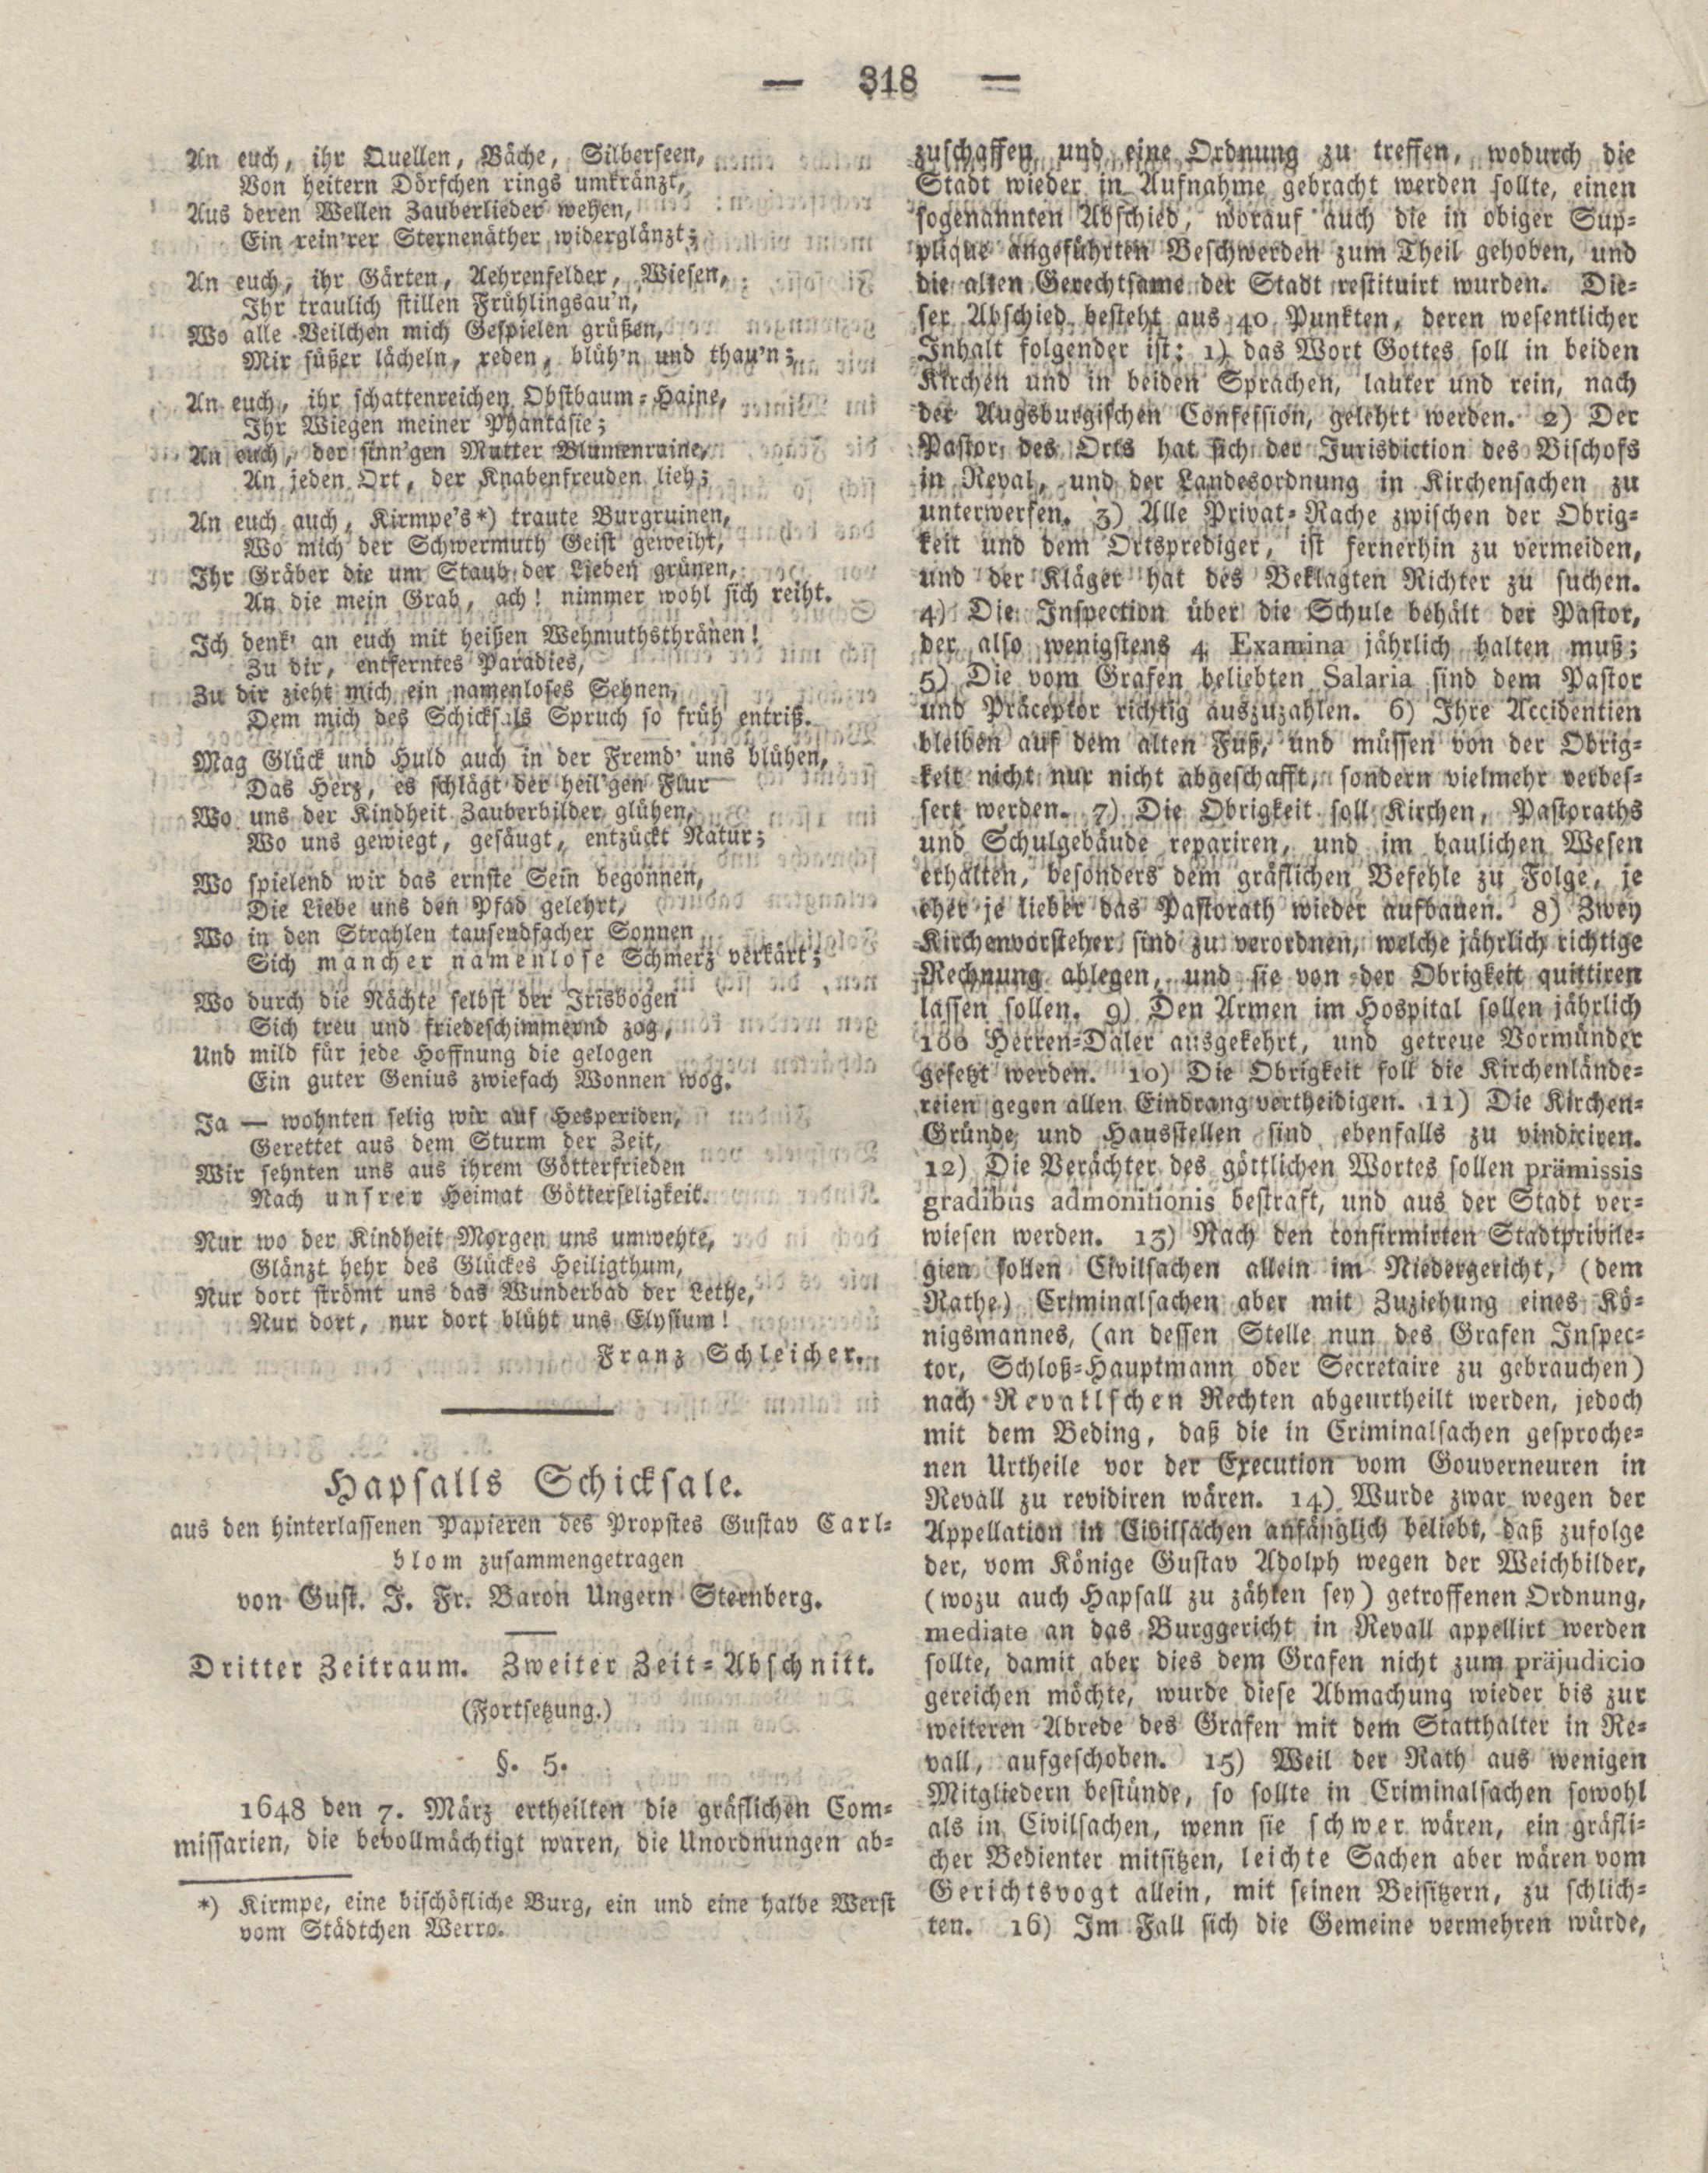 Hapsalls Schicksale [11] (1829) | 1. (318) Main body of text